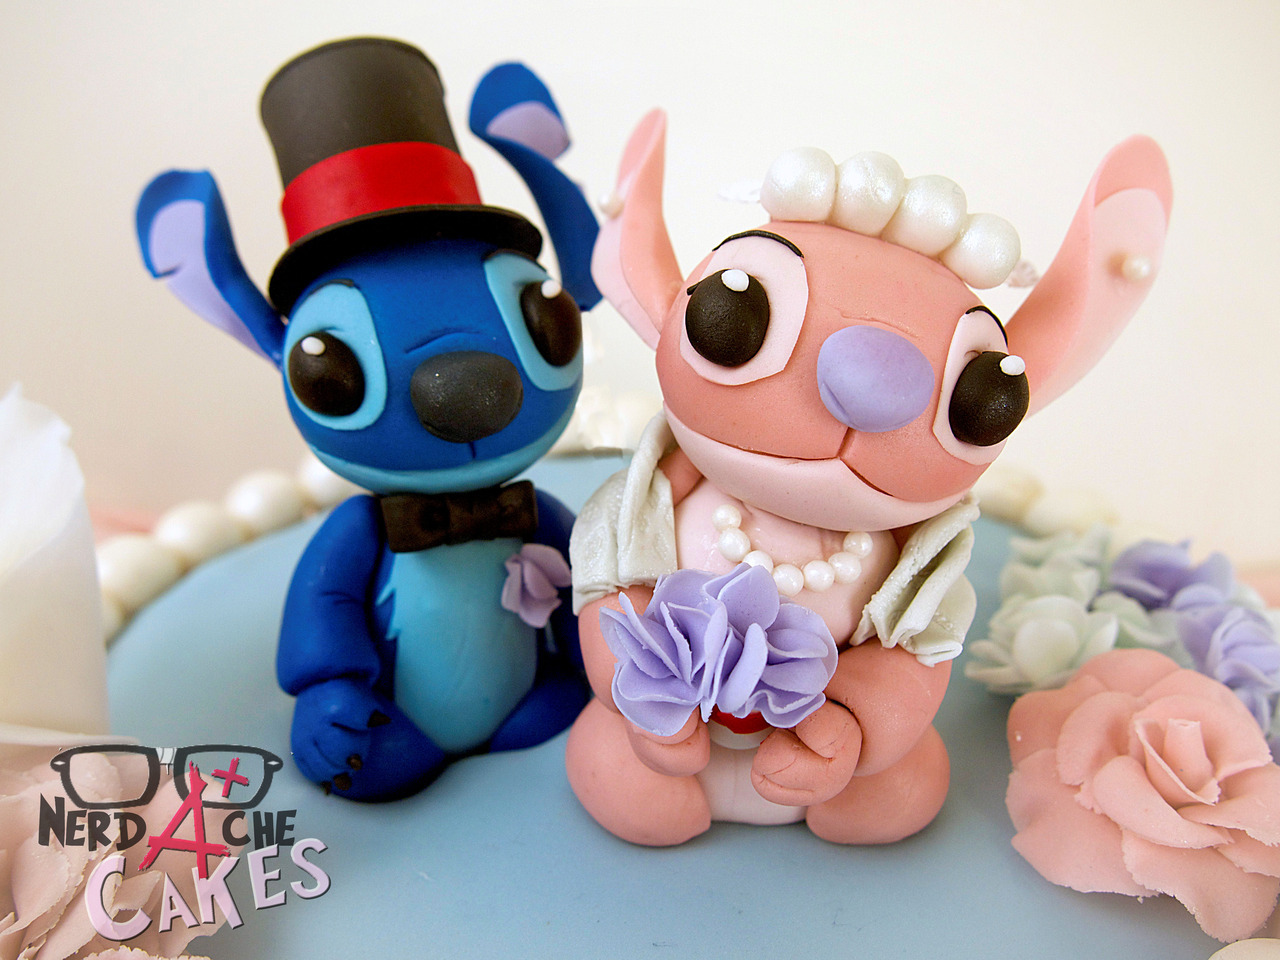 nerdache-cakes:  A Stitch and Angel wedding cake! The bride wanted something elegant-